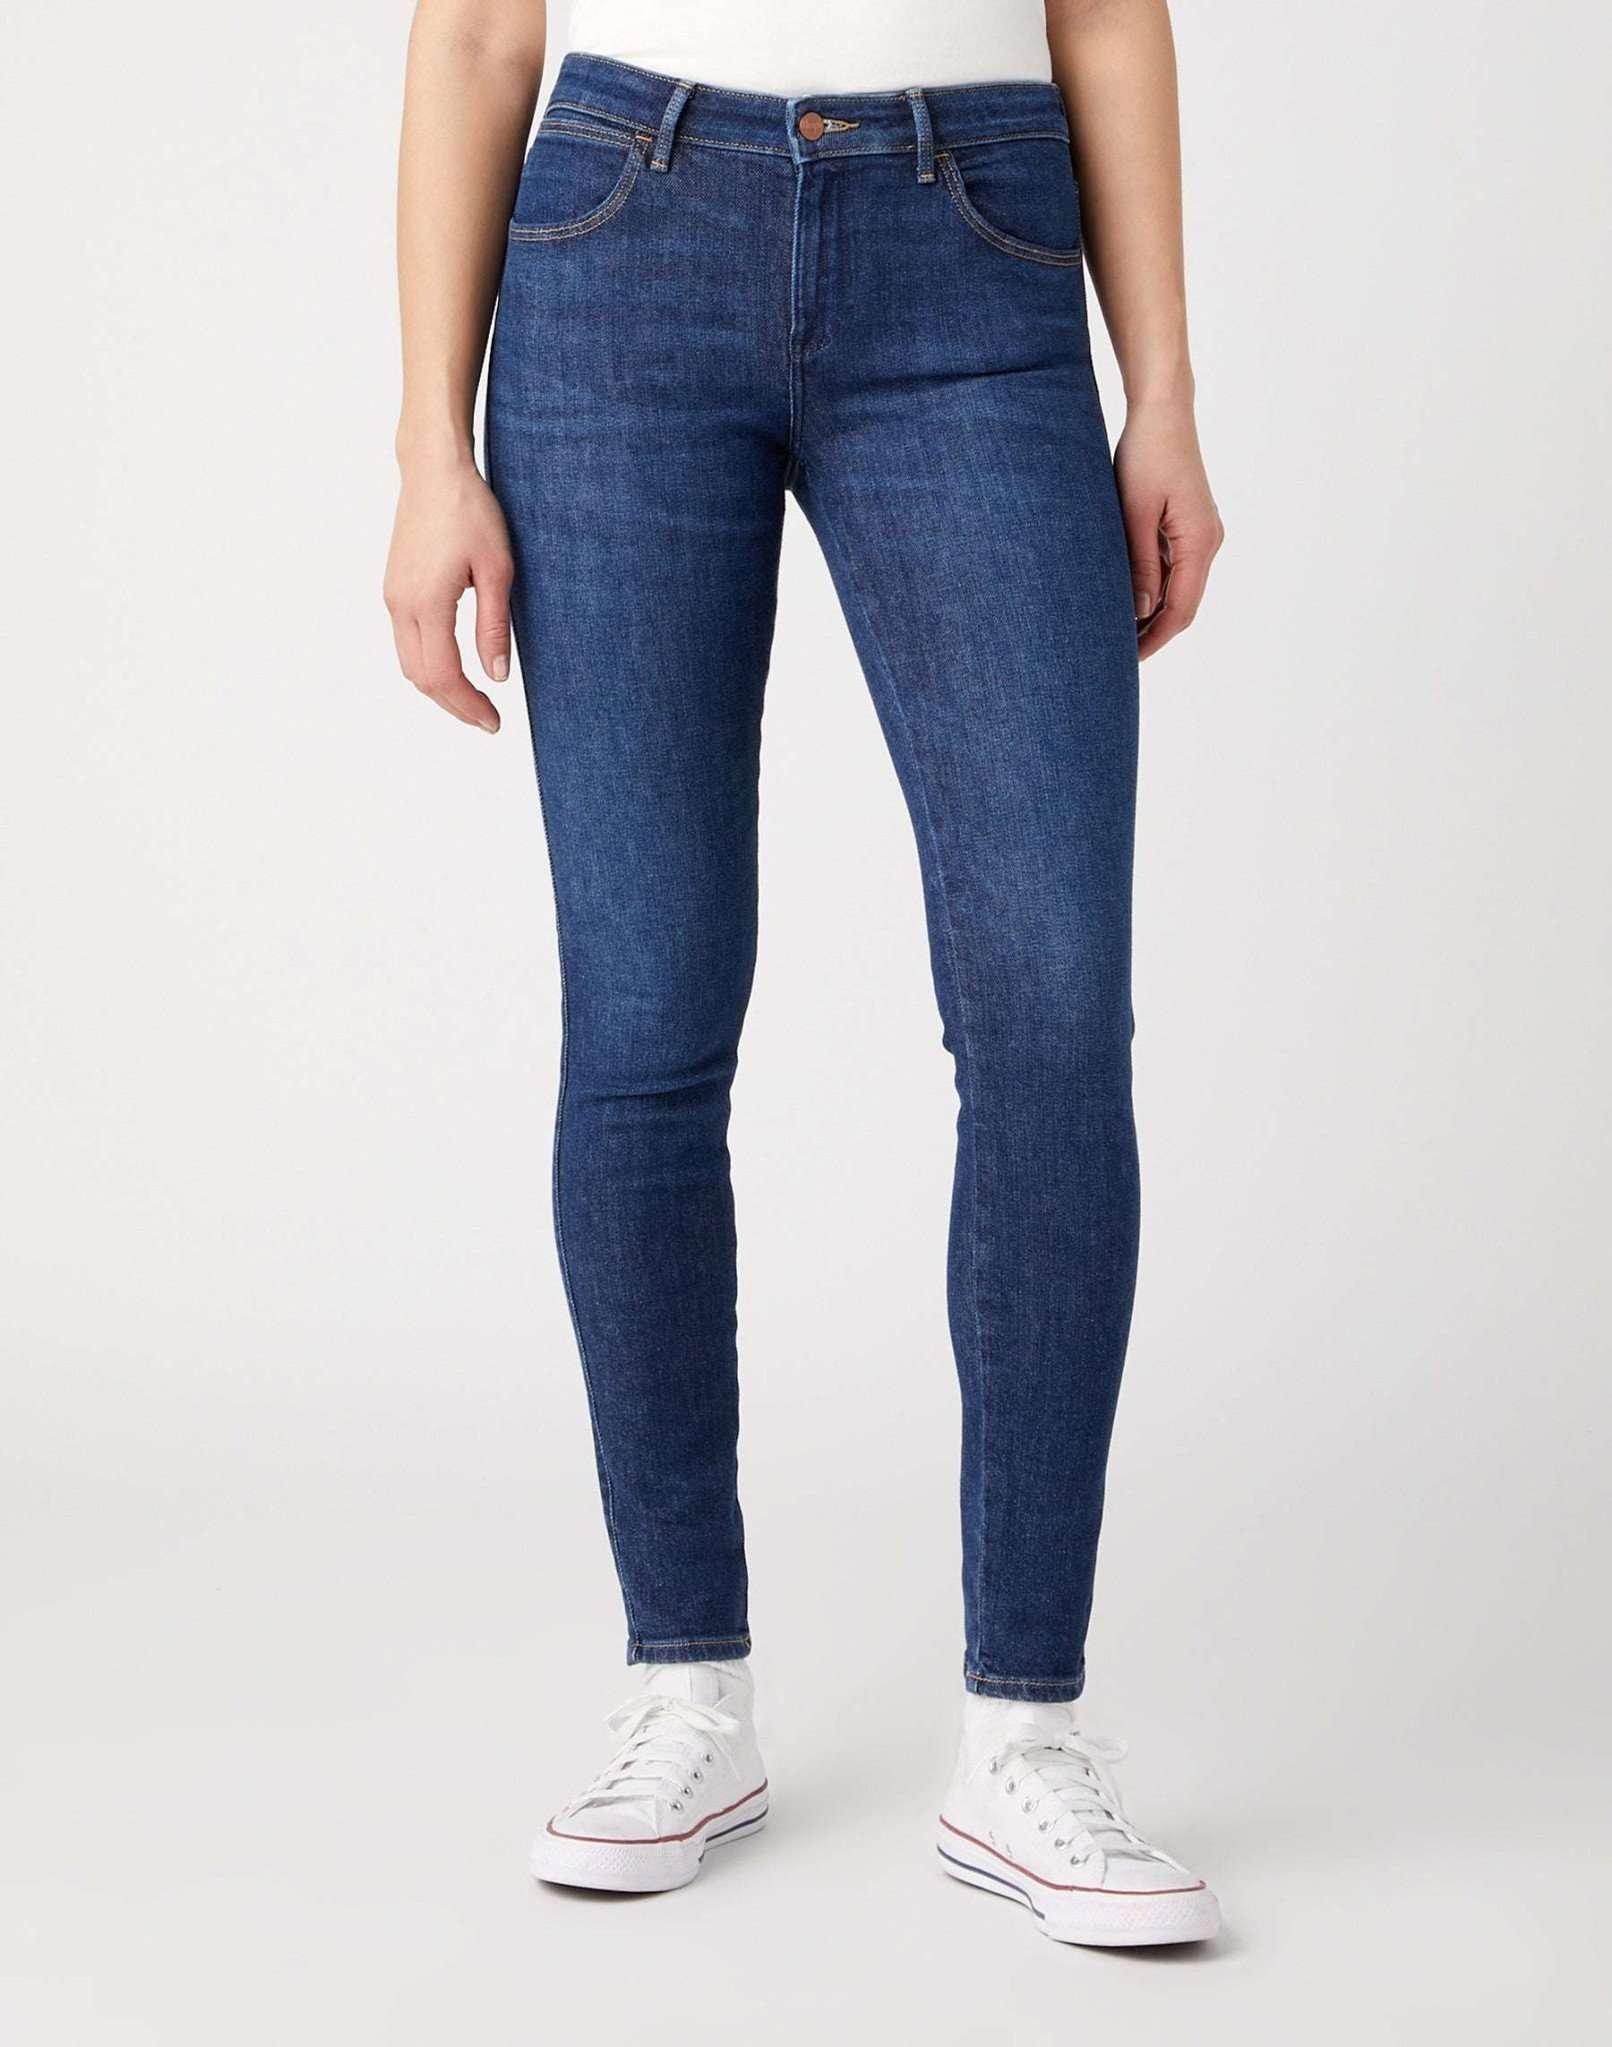 Jeans Skinny Fit Skinny Damen Blau L32/W25 von Wrangler